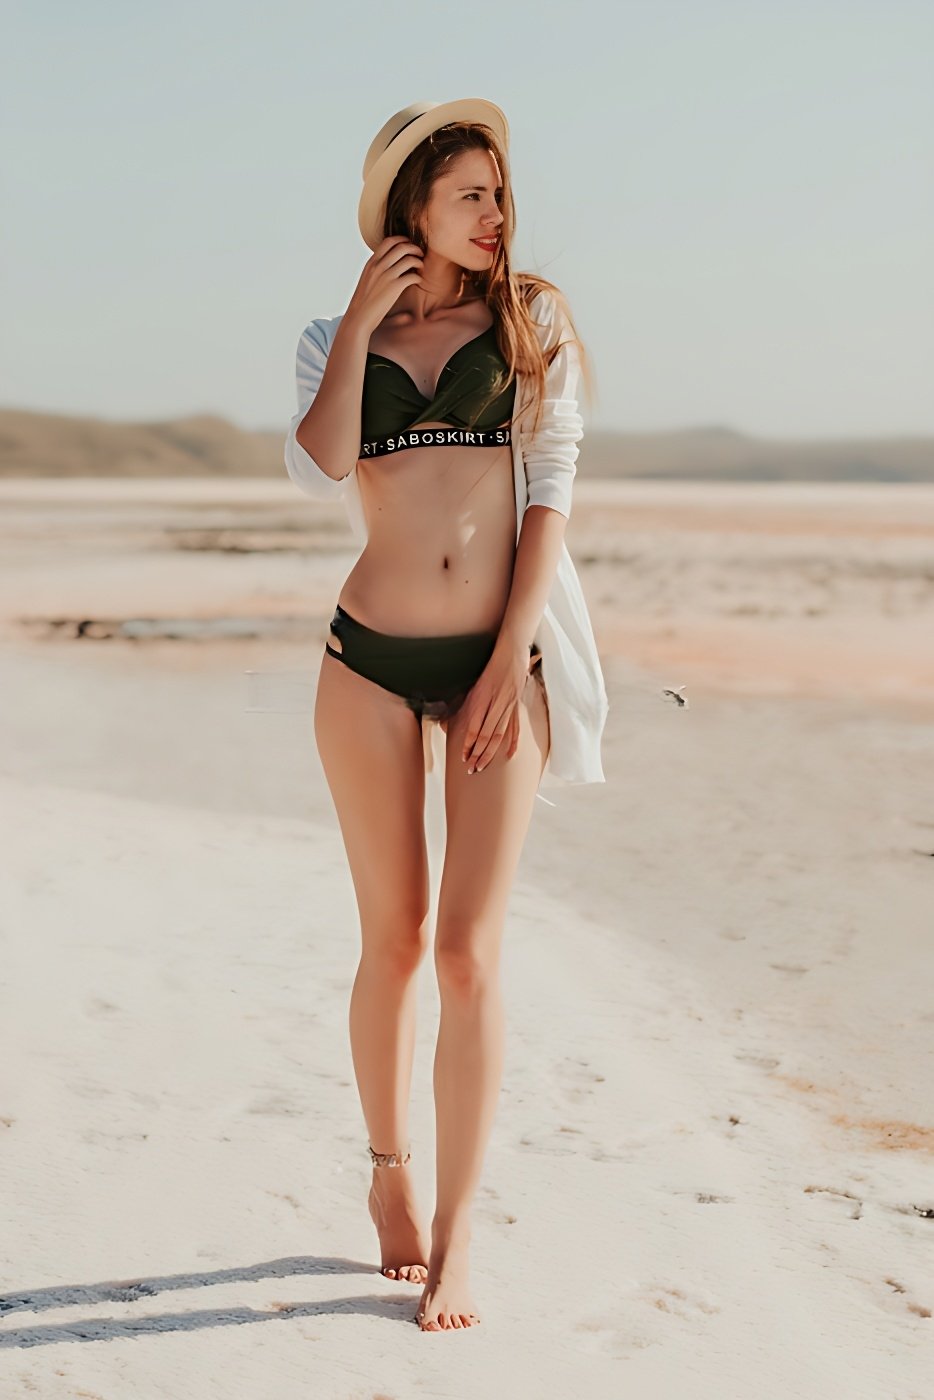 Meet Amazing Austin: Top Escort Girl - model preview photo 1 